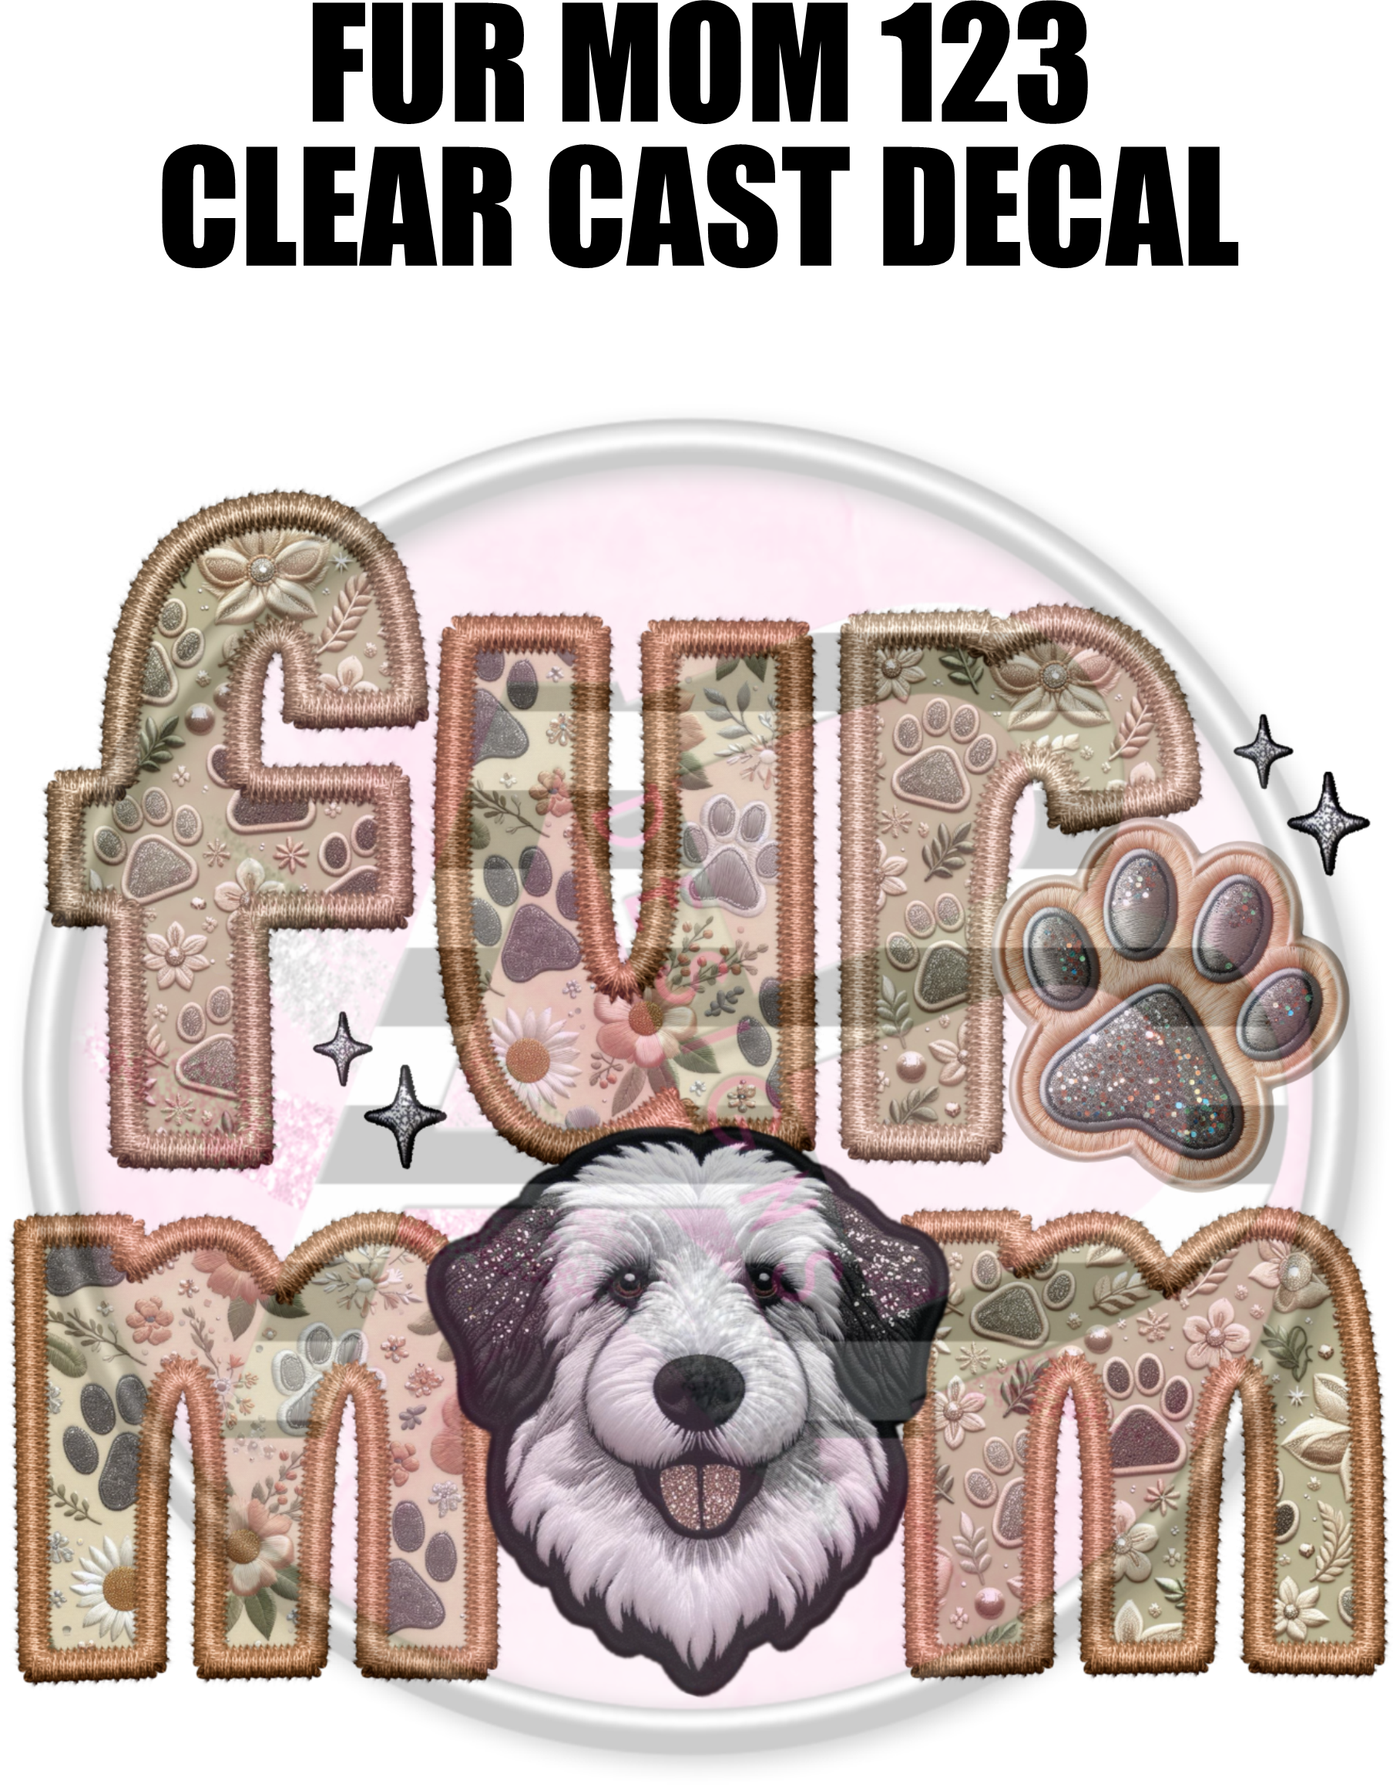 Fur Mom 123 - Clear Cast Decal